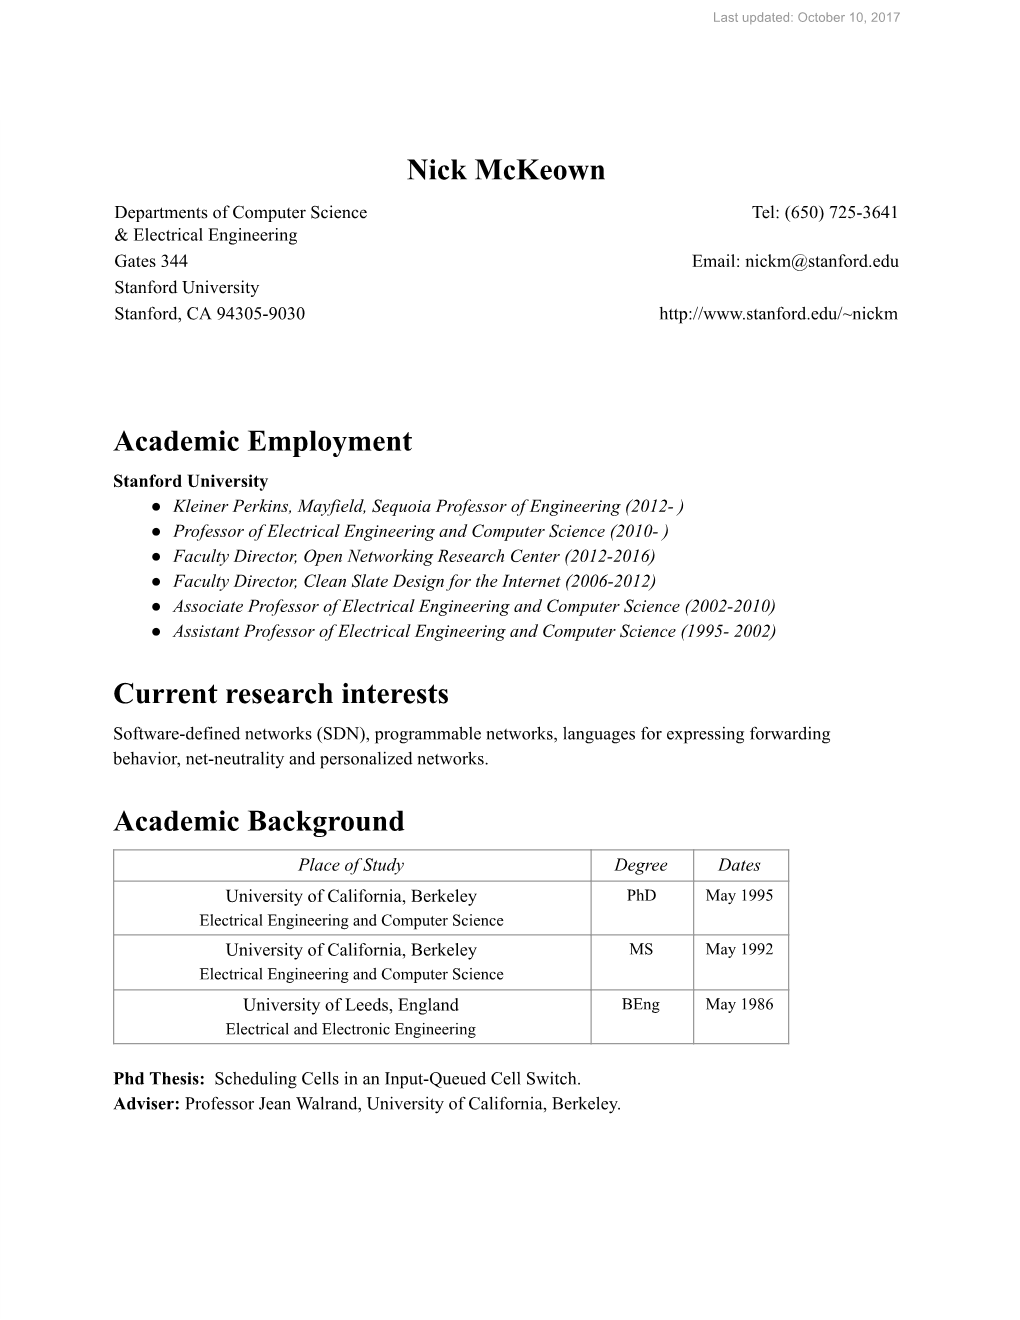 Nick Mckeown Academic Employment Current Research Interests